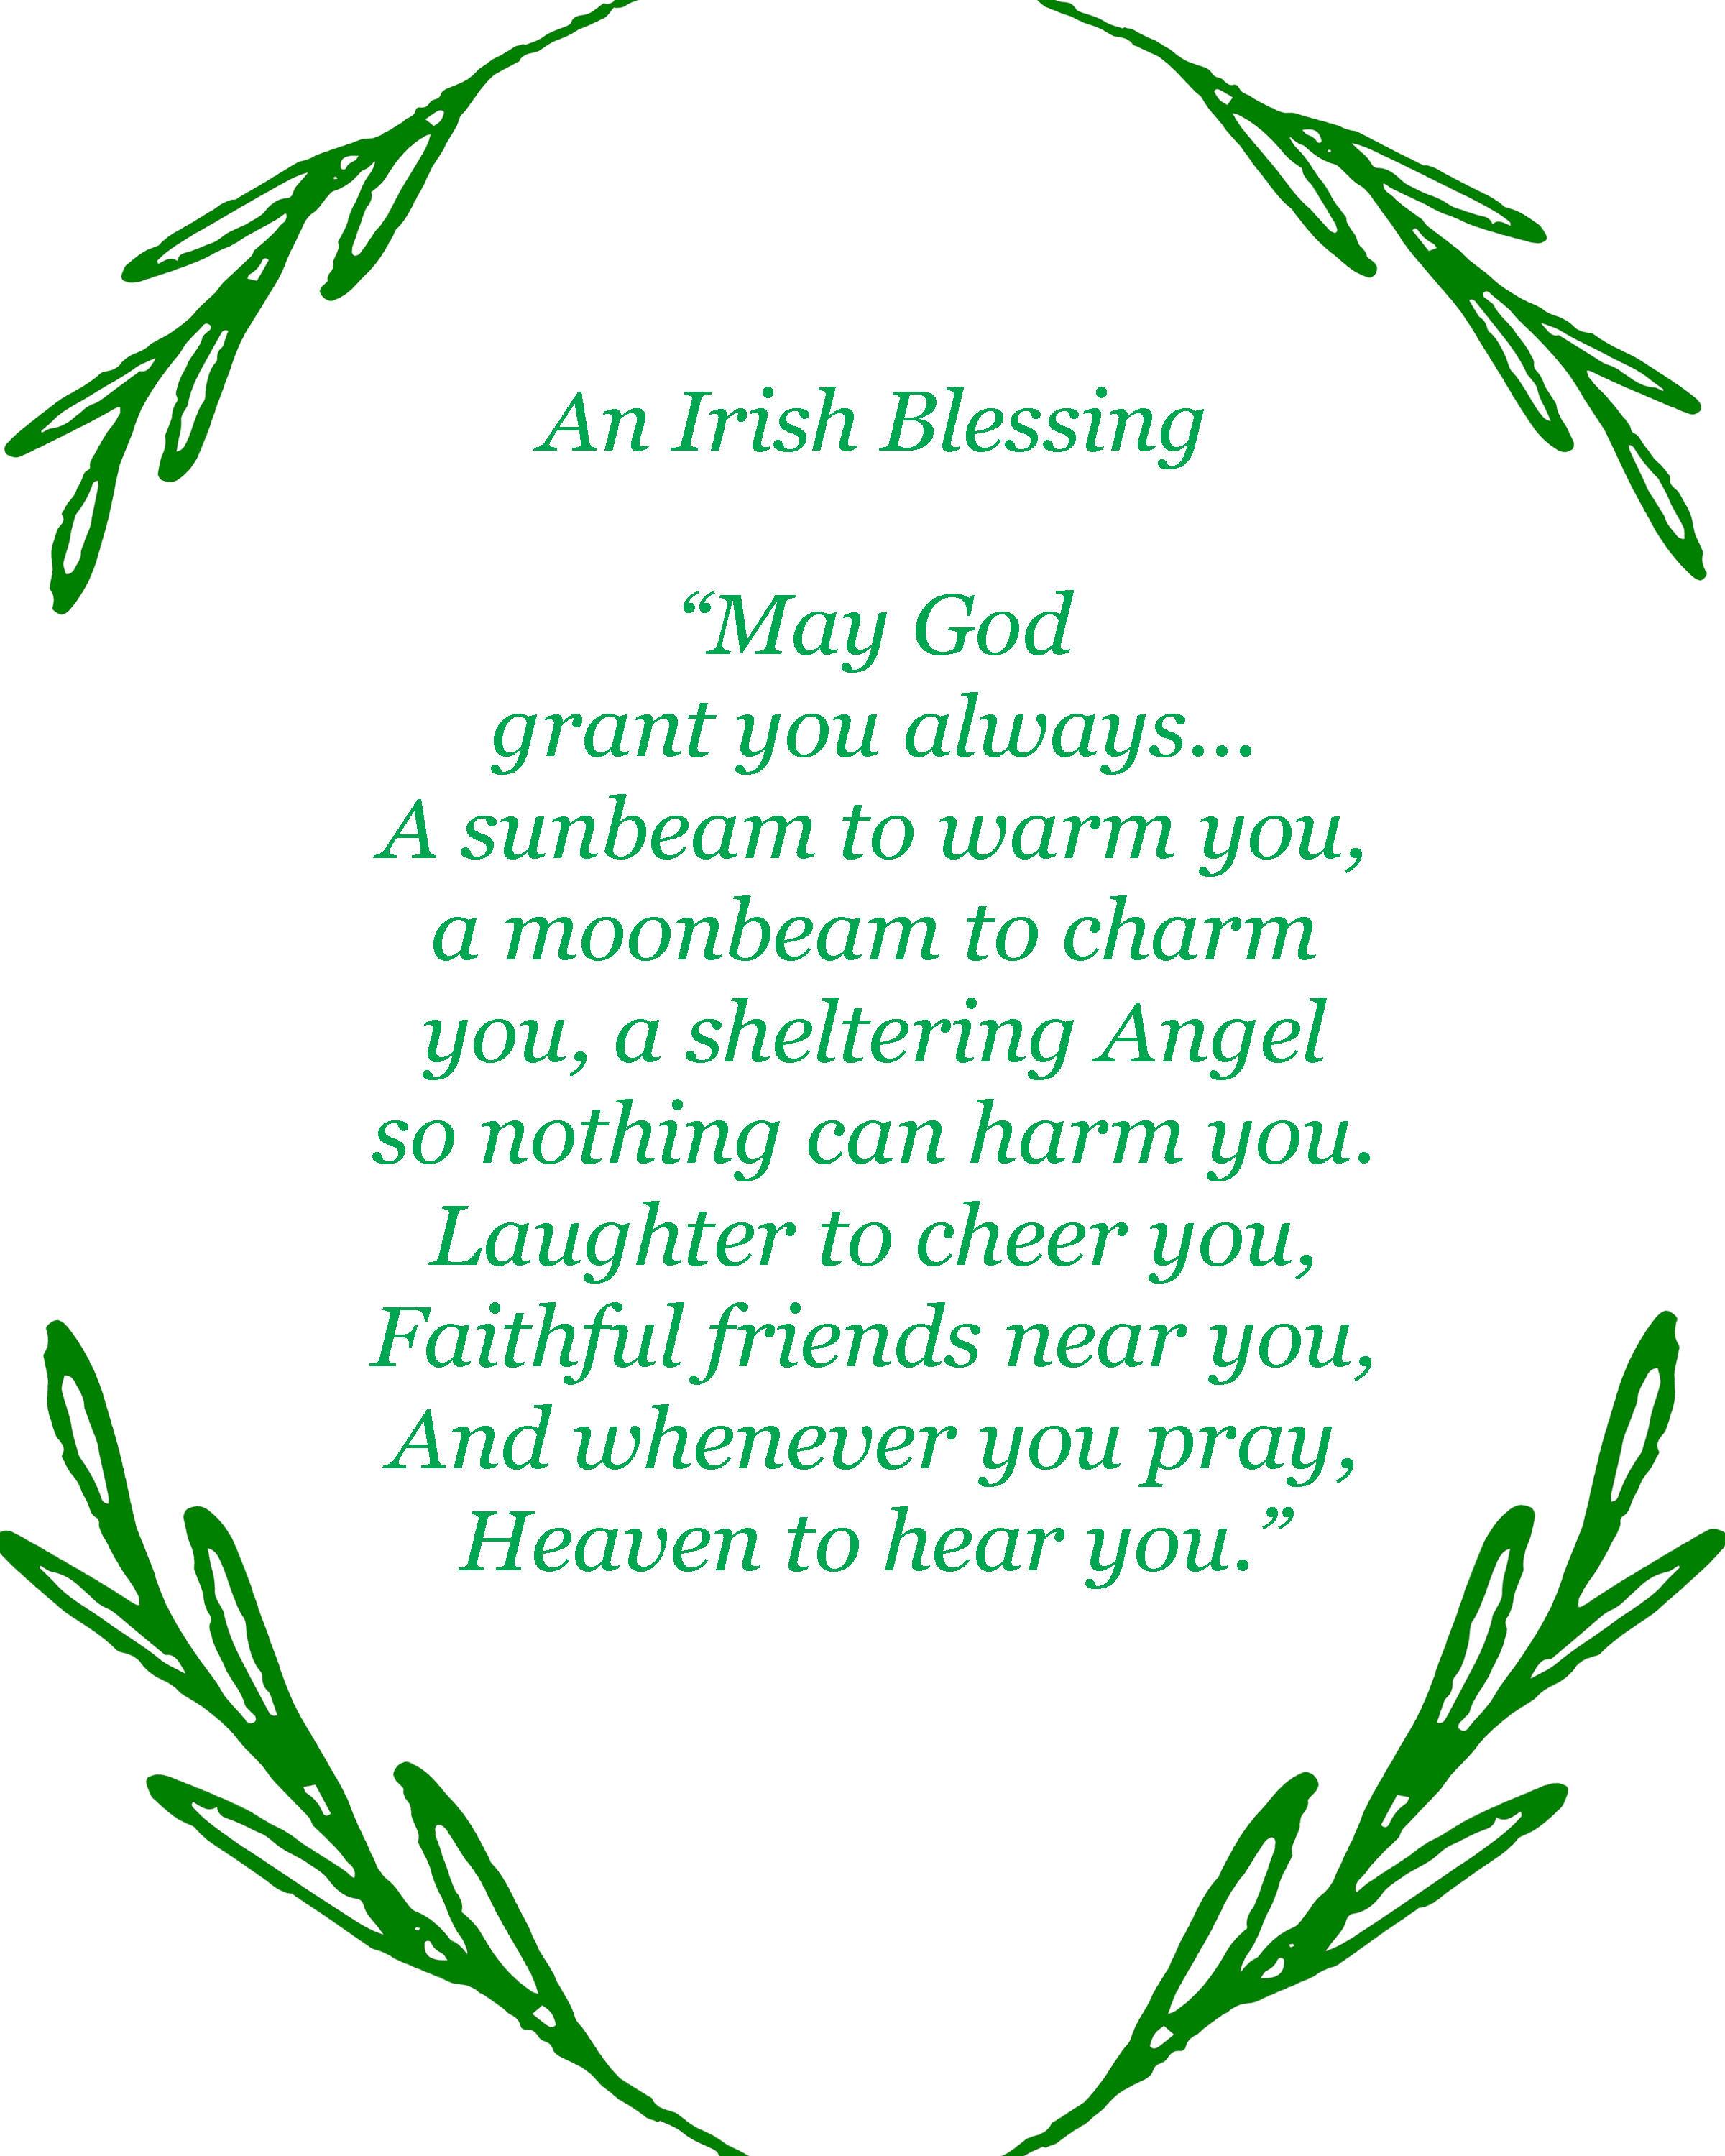 St, Patrick's Day Irish Blessing Free Printable